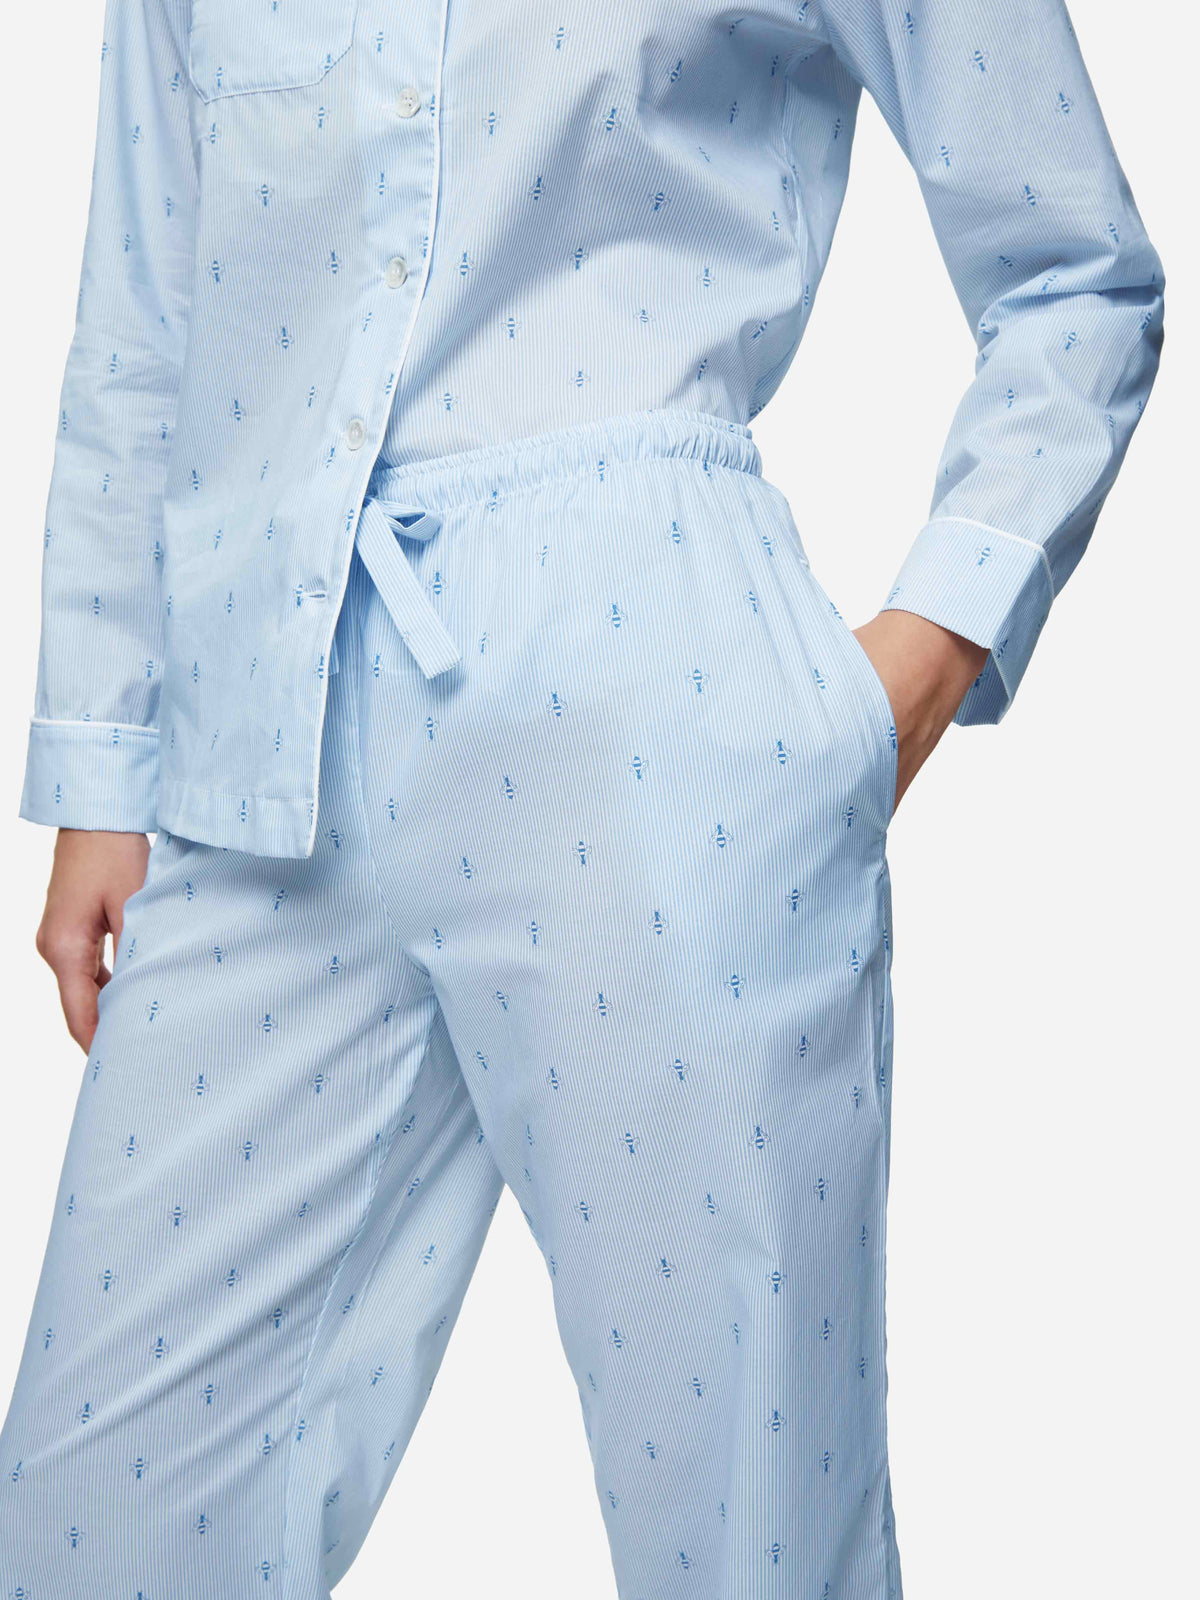 Women's Pyjamas Nelson 94 Cotton Batiste Blue